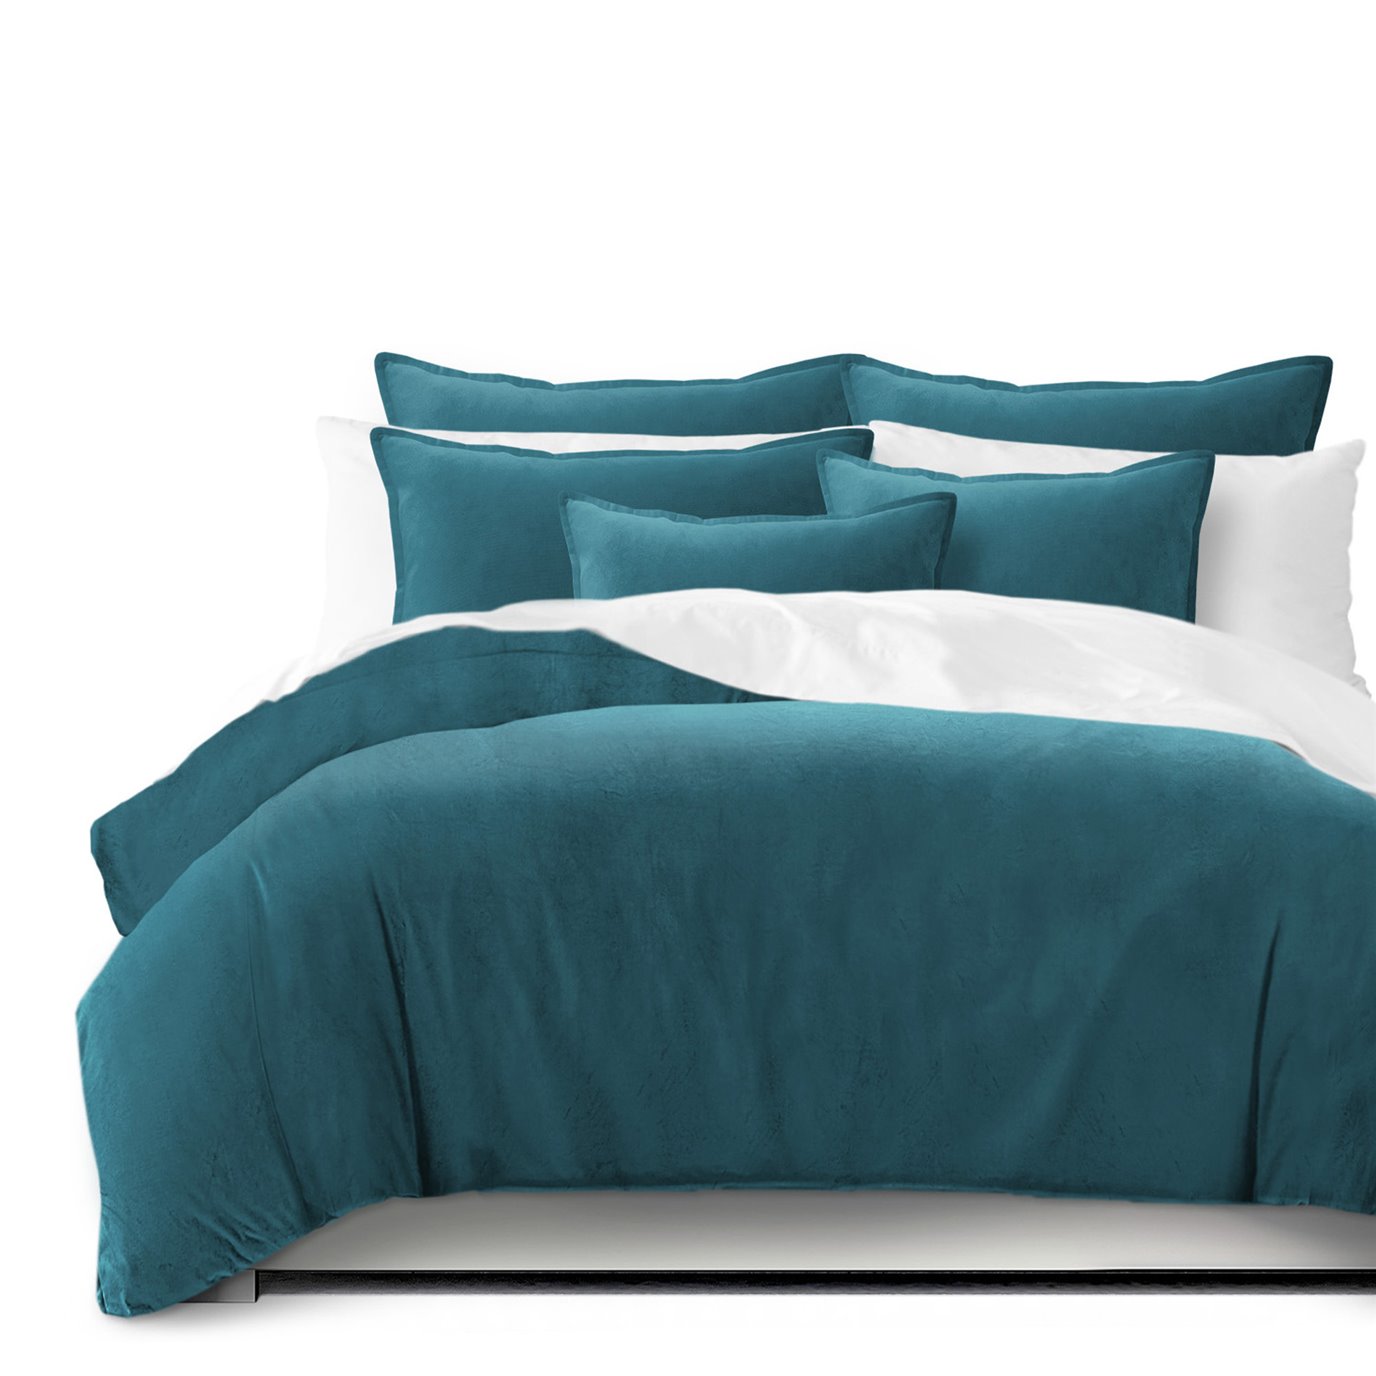 Vanessa Turquoise Comforter and Pillow Sham(s) Set - Size King / California King